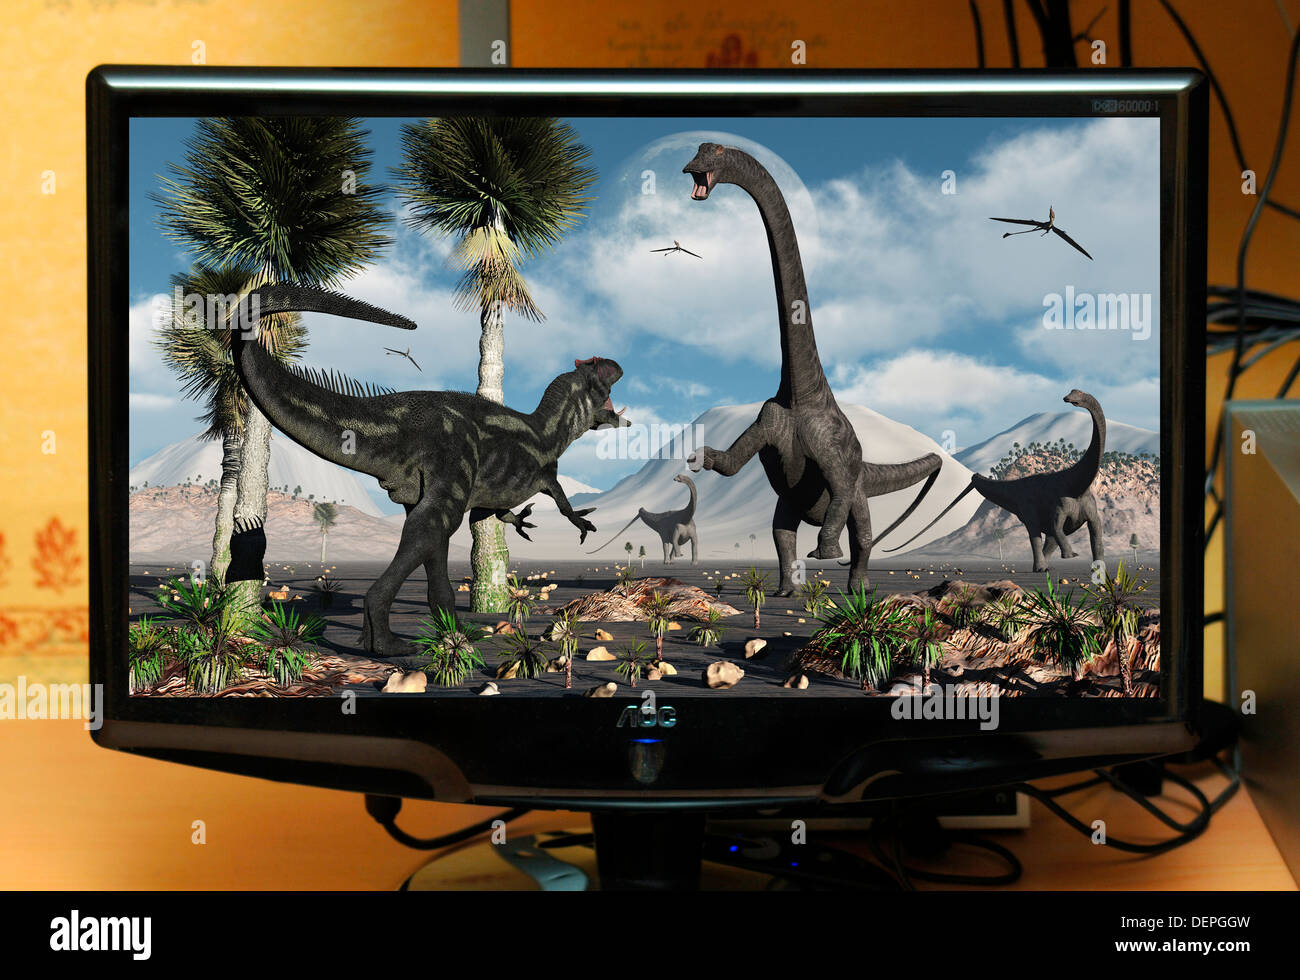 Una imagen de un dinosaurio carnívoro allosaurus enfrenta saurópodos dinosaurios herbívoros en una pantalla de ordenador. Foto de stock